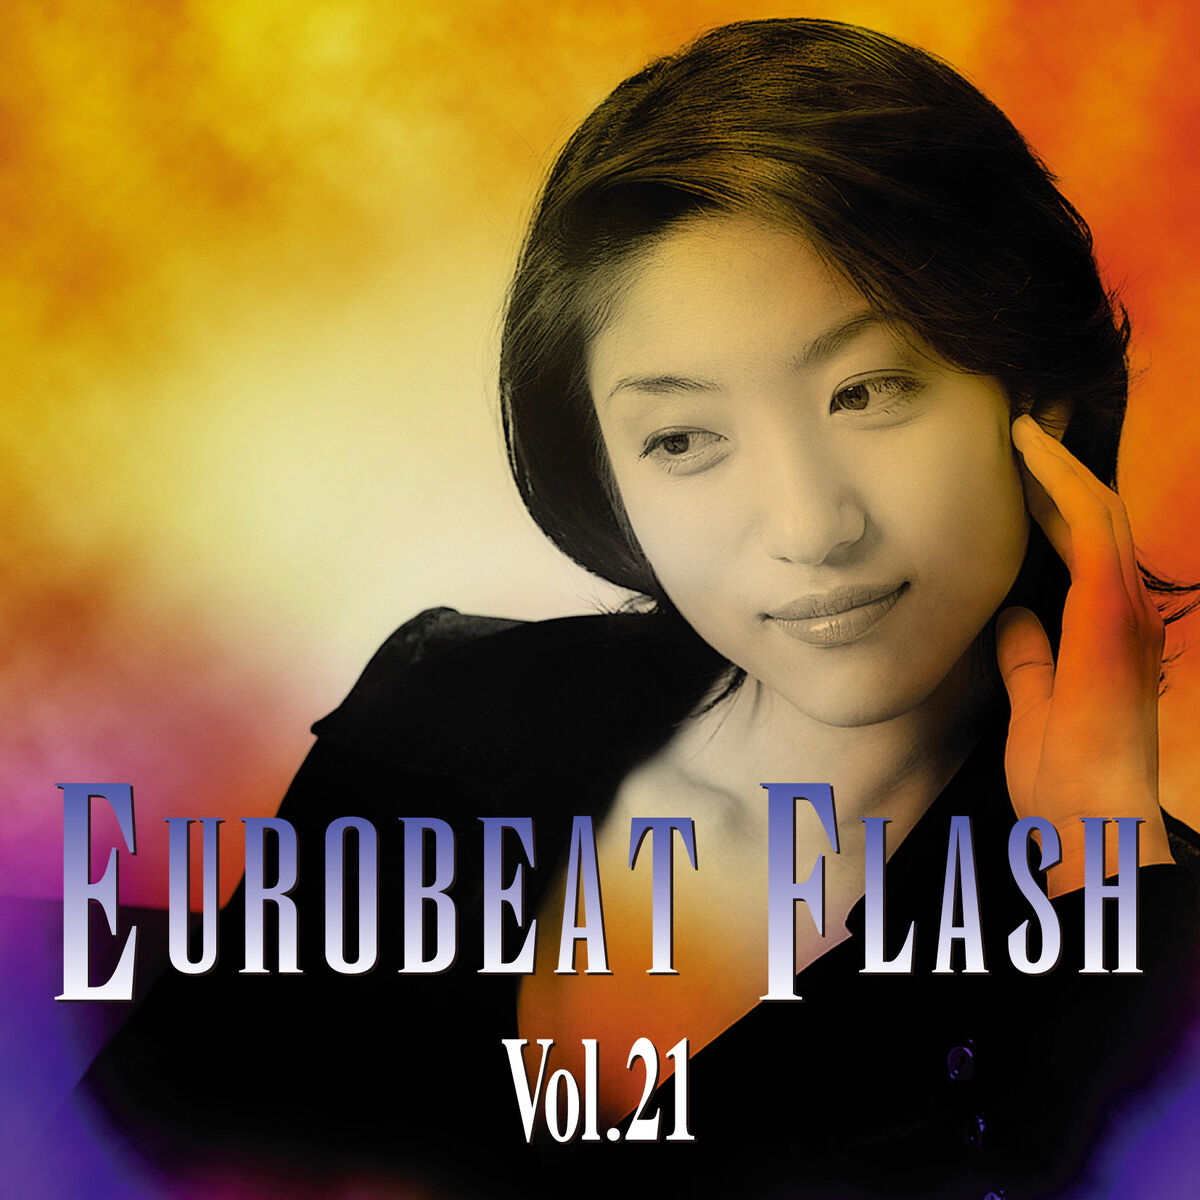 Eurobeat Flash Vol. 21 | Eurobeat Wiki | Fandom